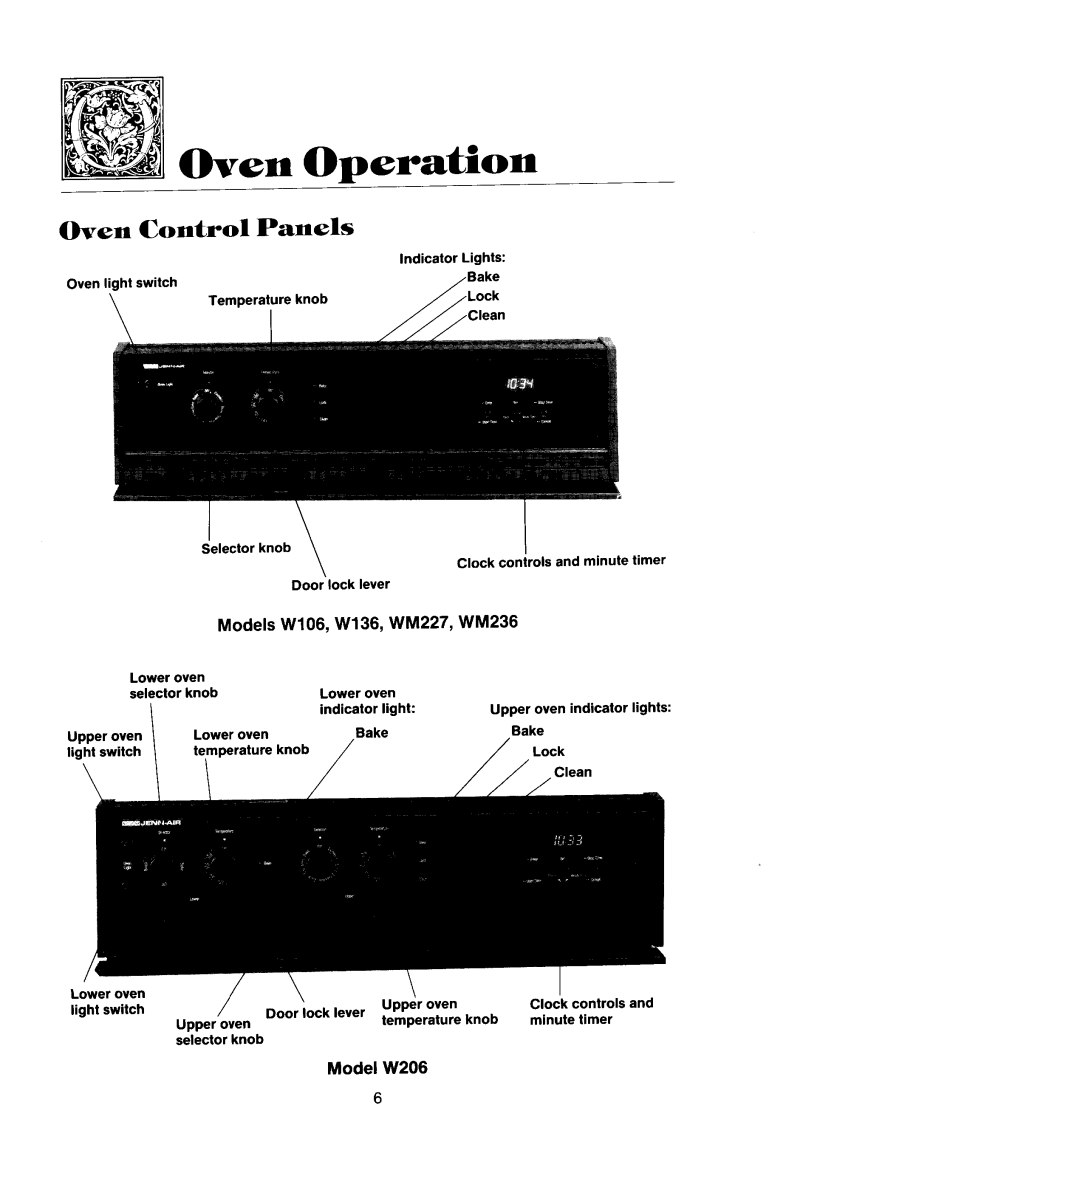 Jenn-Air W206 manual Oven Operation, Oven Control Panels, Models W106, W136, WM227, WM236, selector 